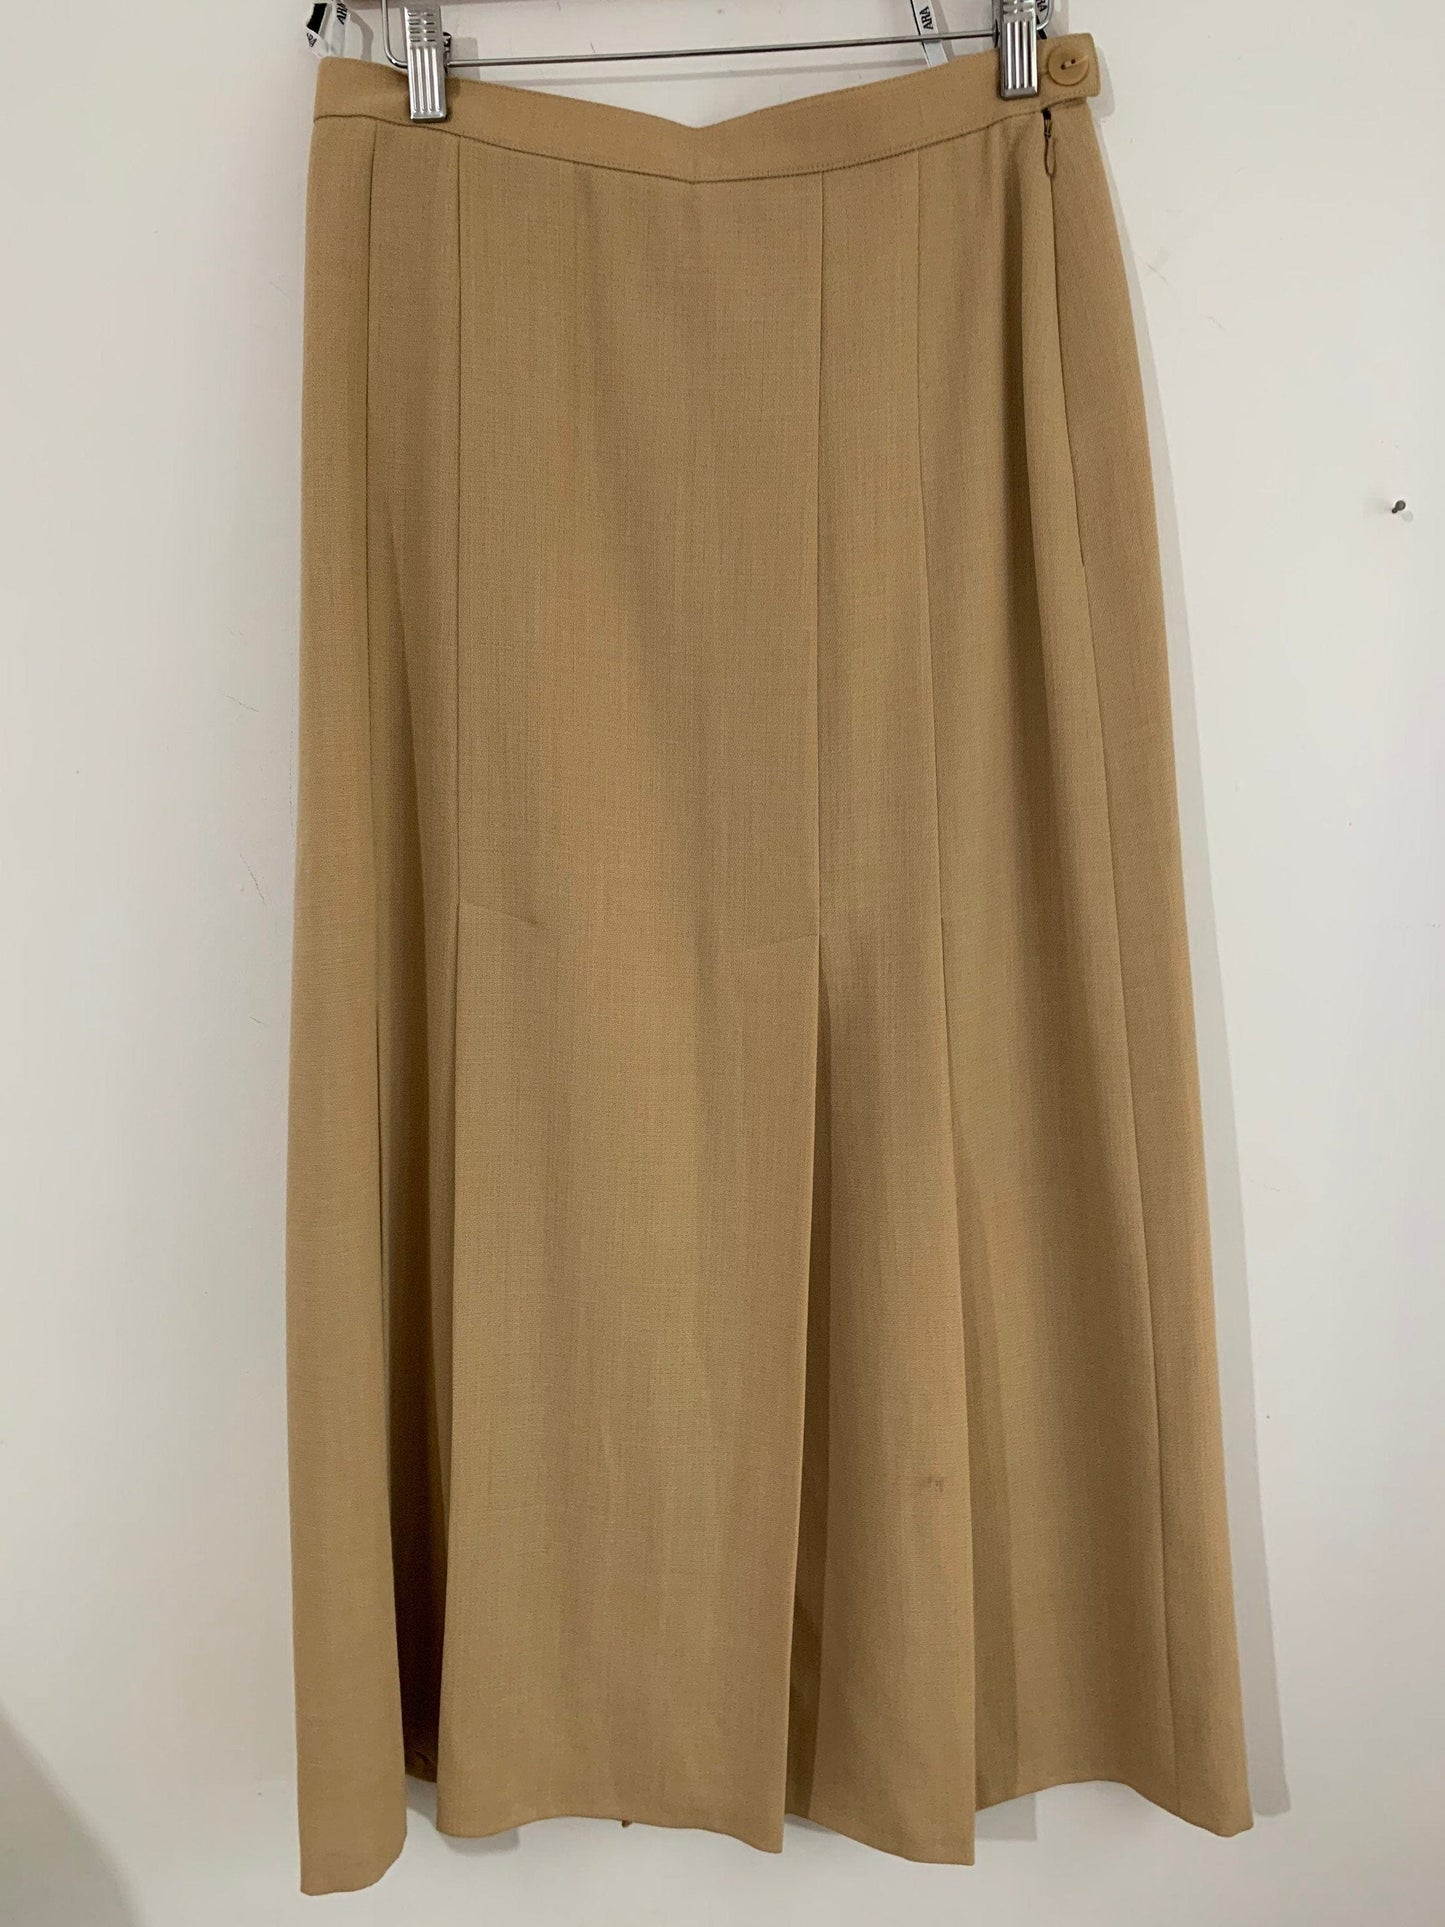 Vintage A Line Skirt BoxPleat Midi Length Dark Mustard Yellow UK 12-14